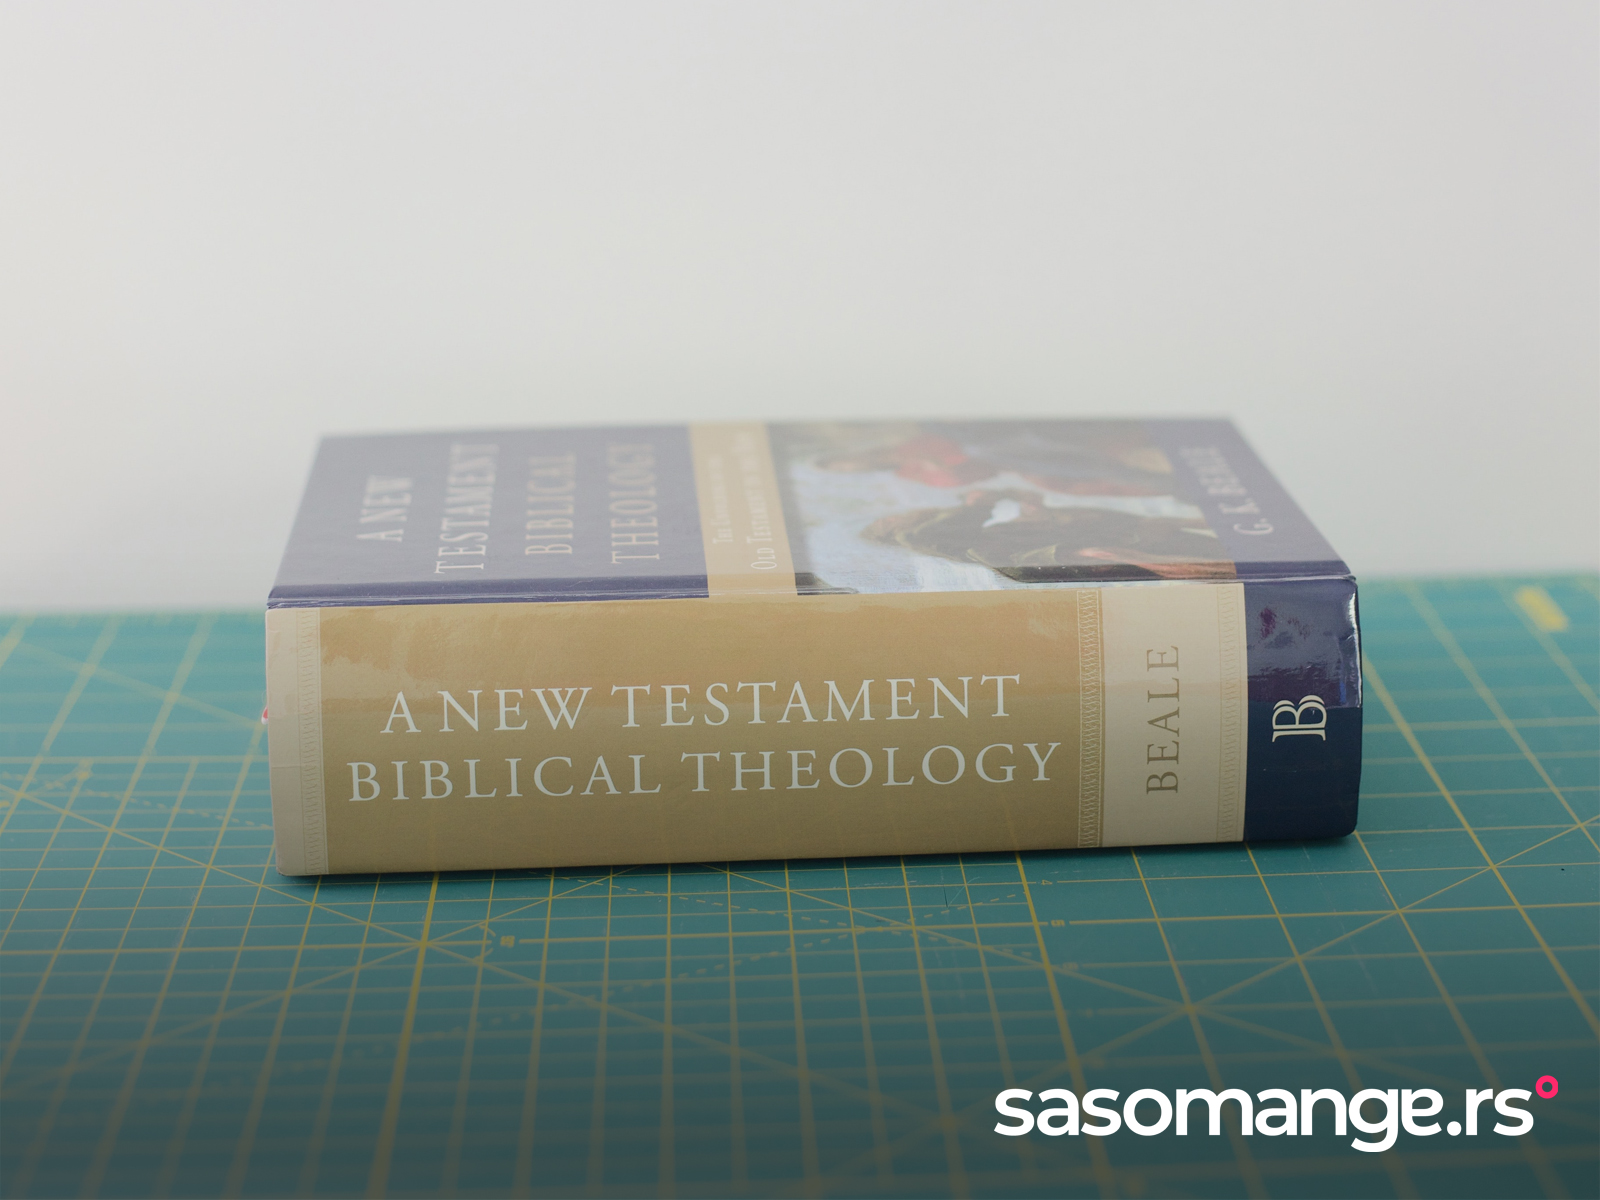 Teološke knjige